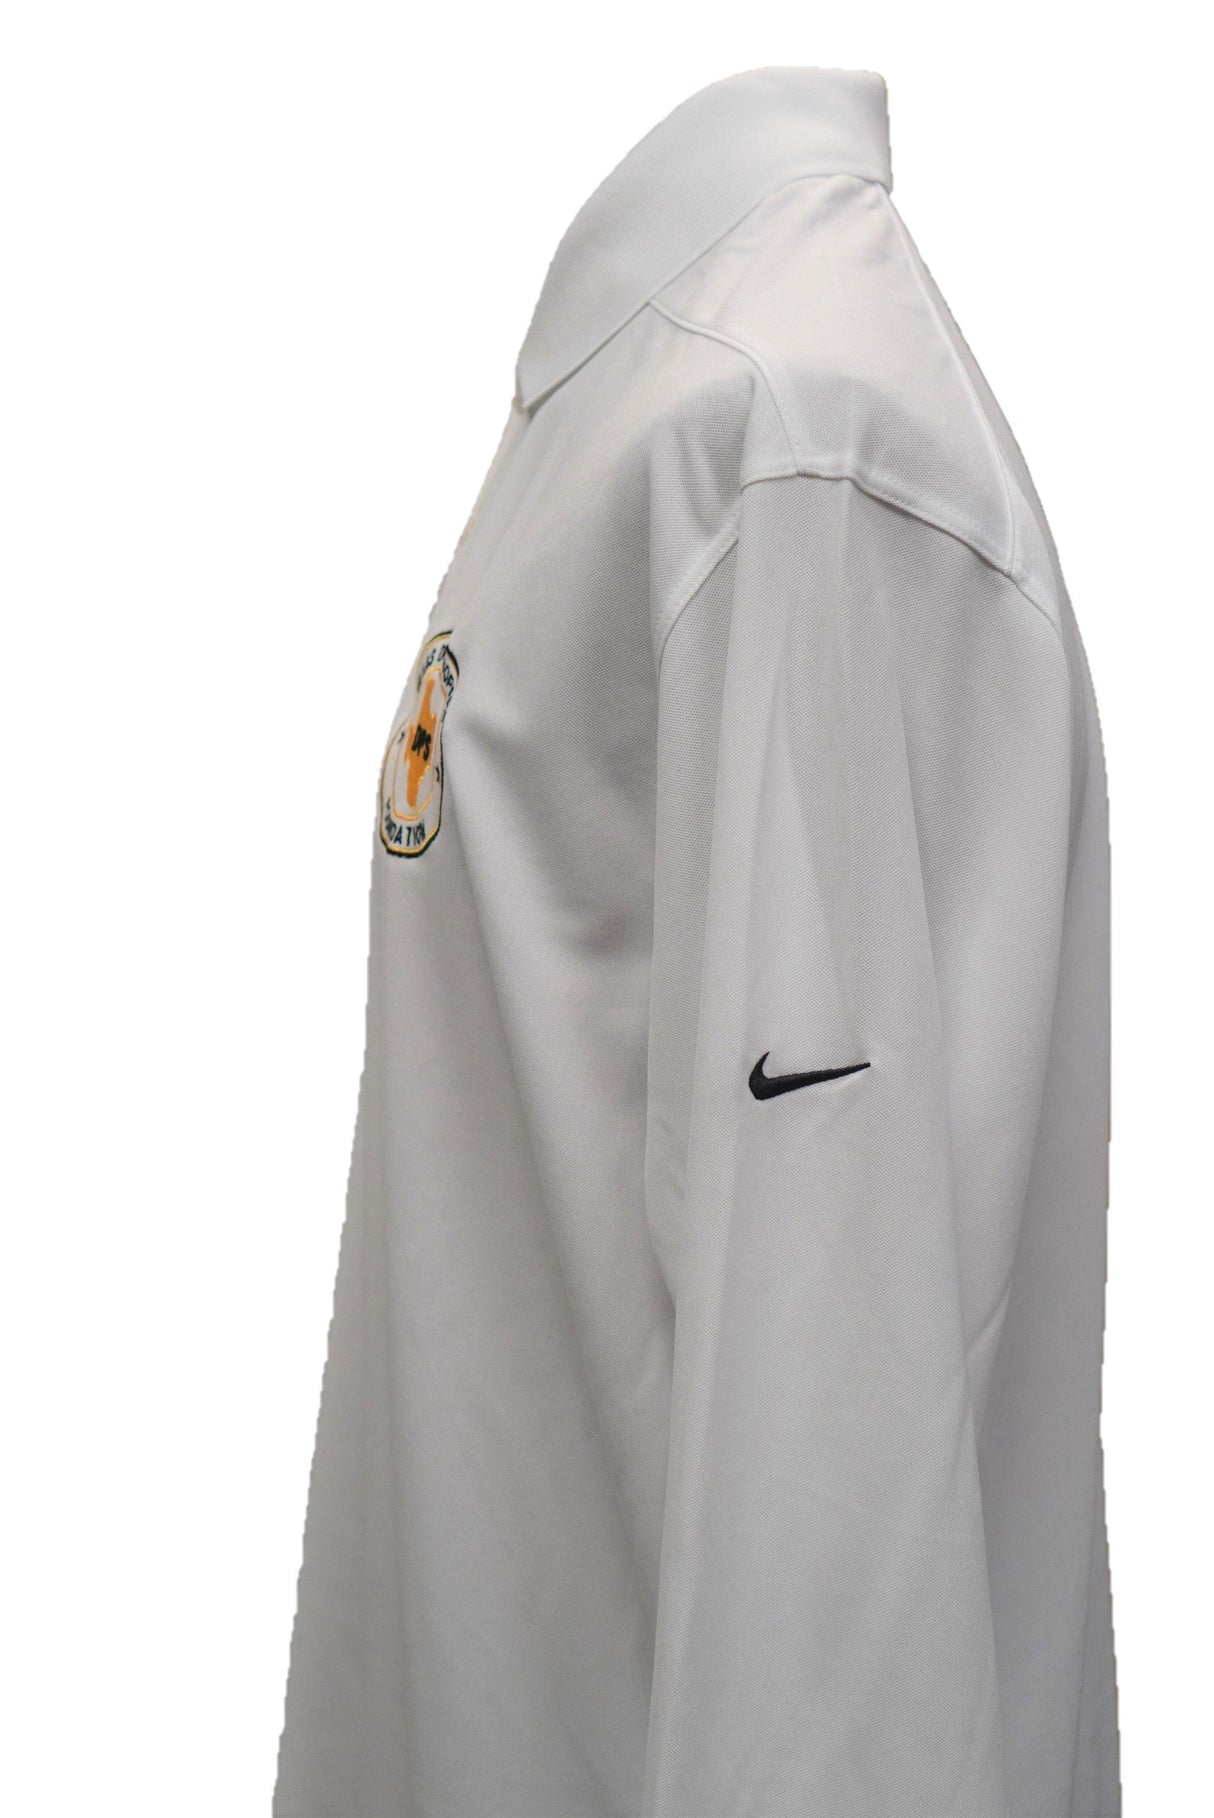 Nike Foundation Polo - Long Sleeve